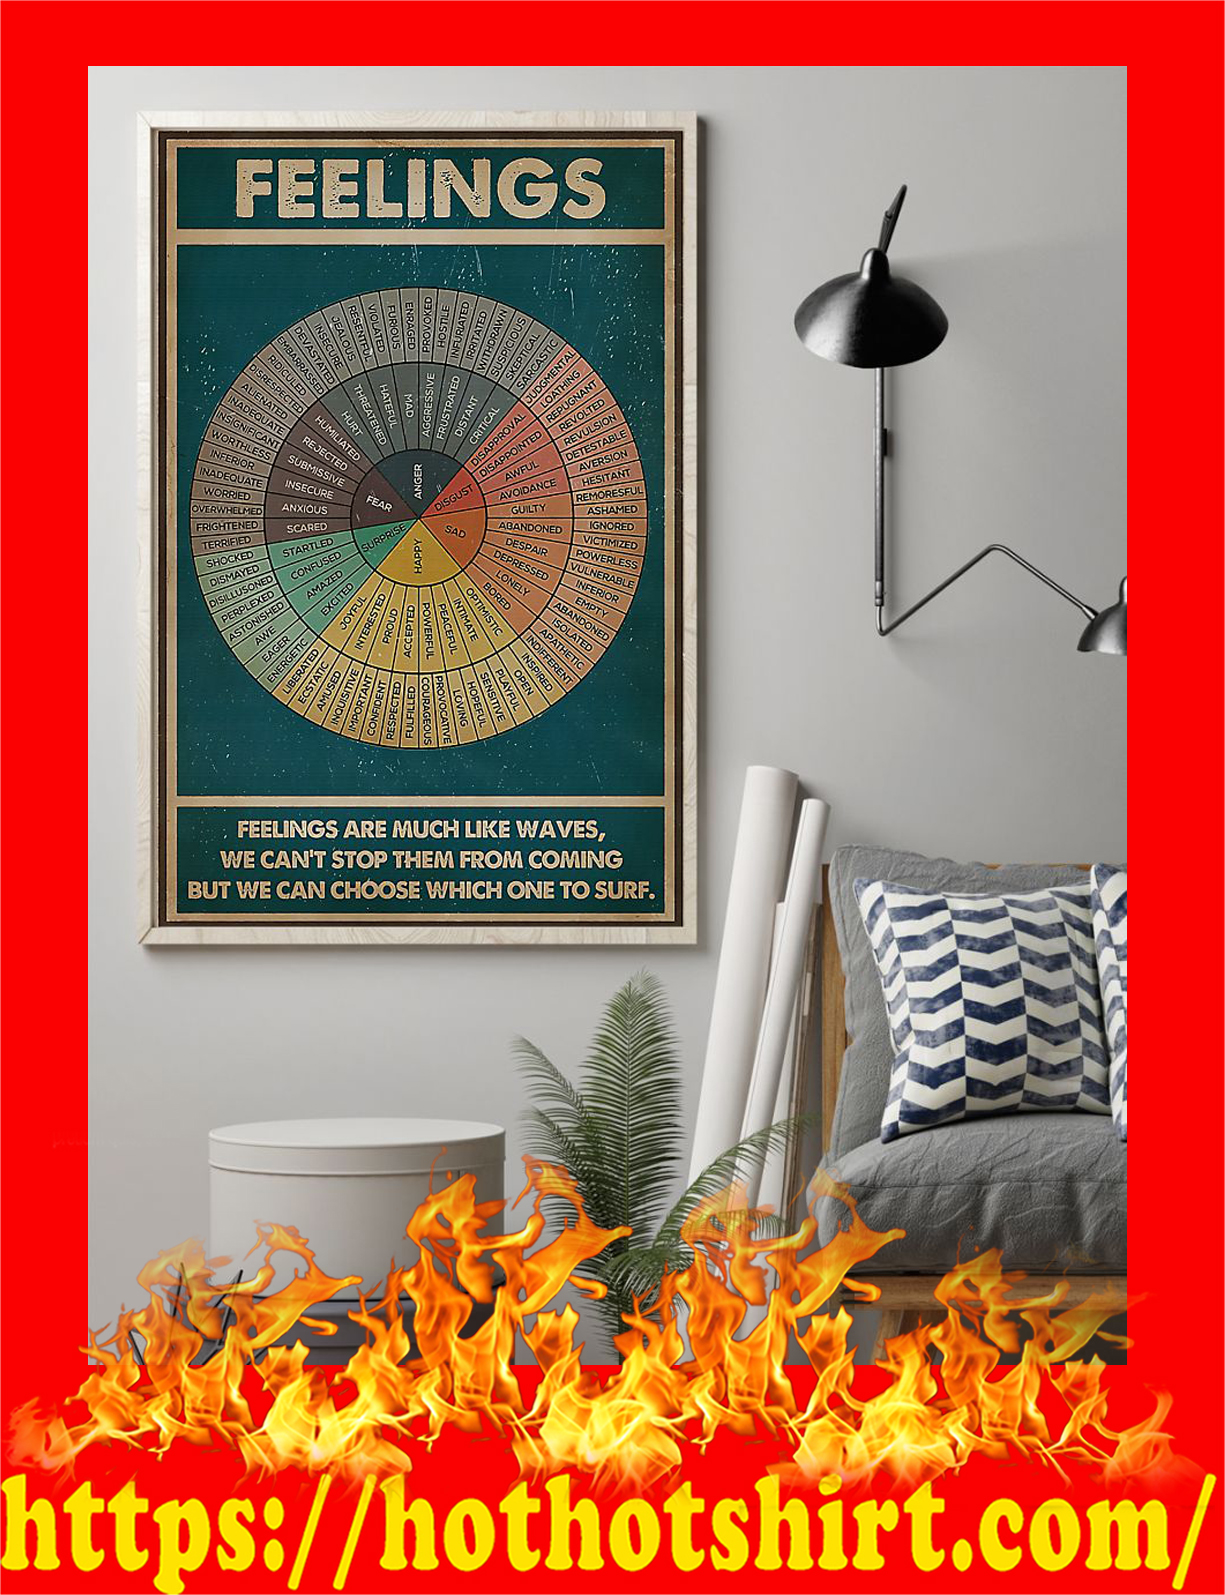 Social worker feelings feelings are much like waves poster